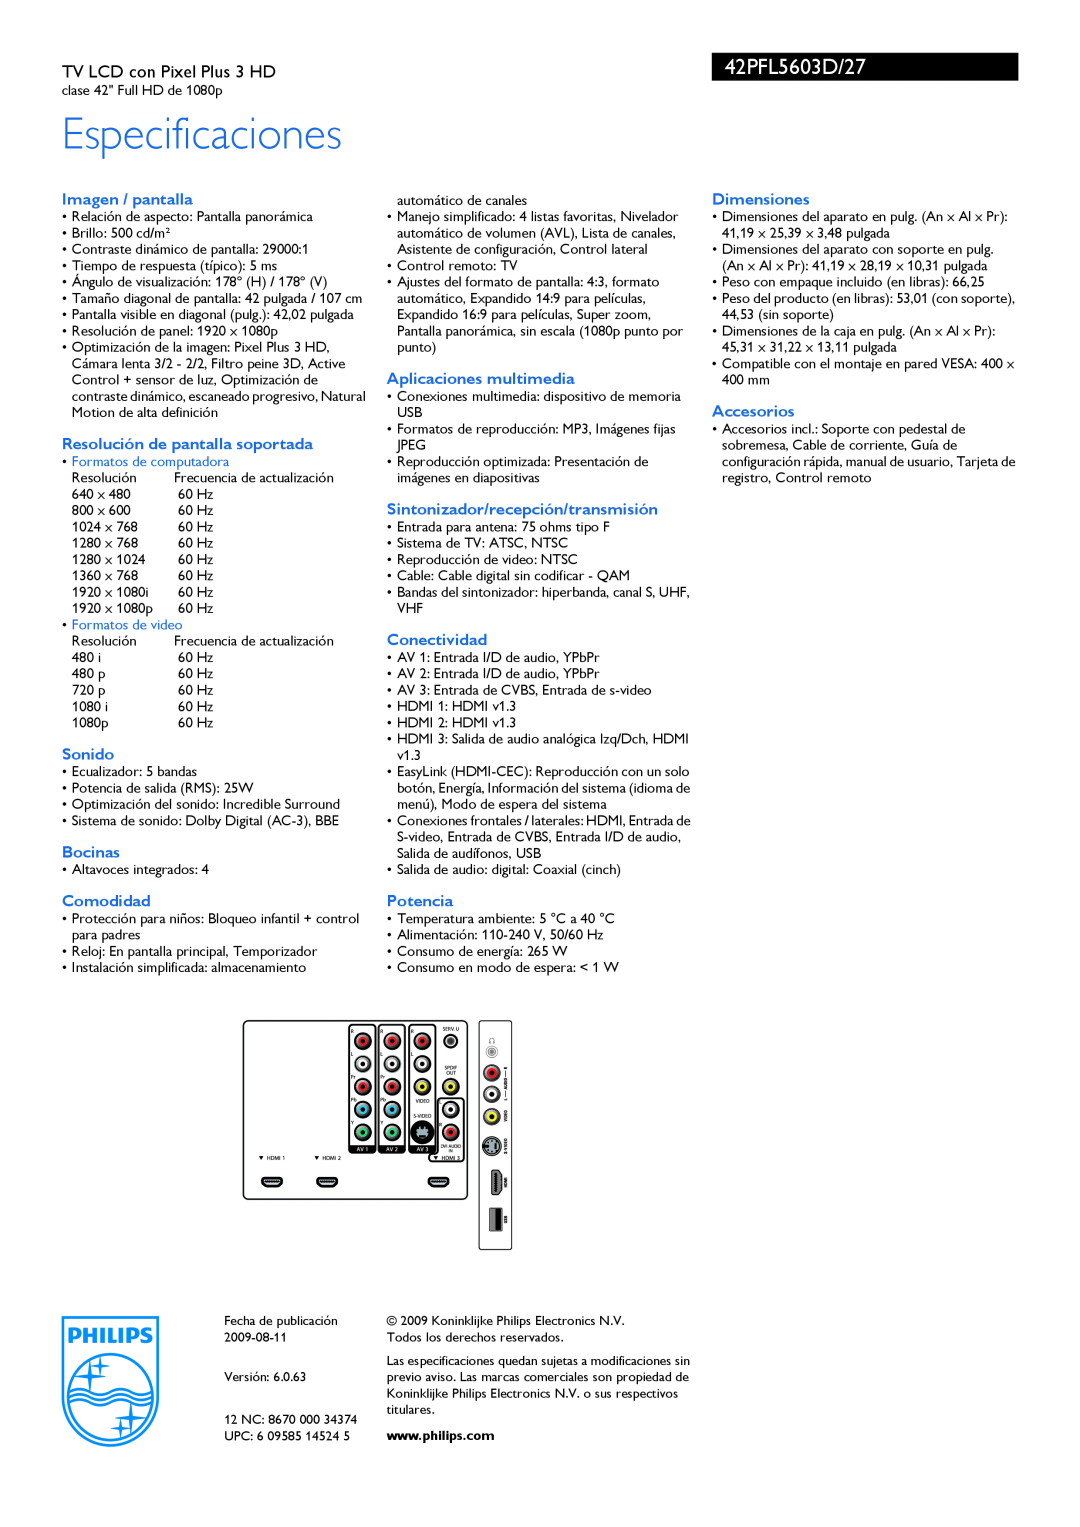 Philips manual Especificaciones, 42PFL5603D/27, TV LCD con Pixel Plus 3 HD 